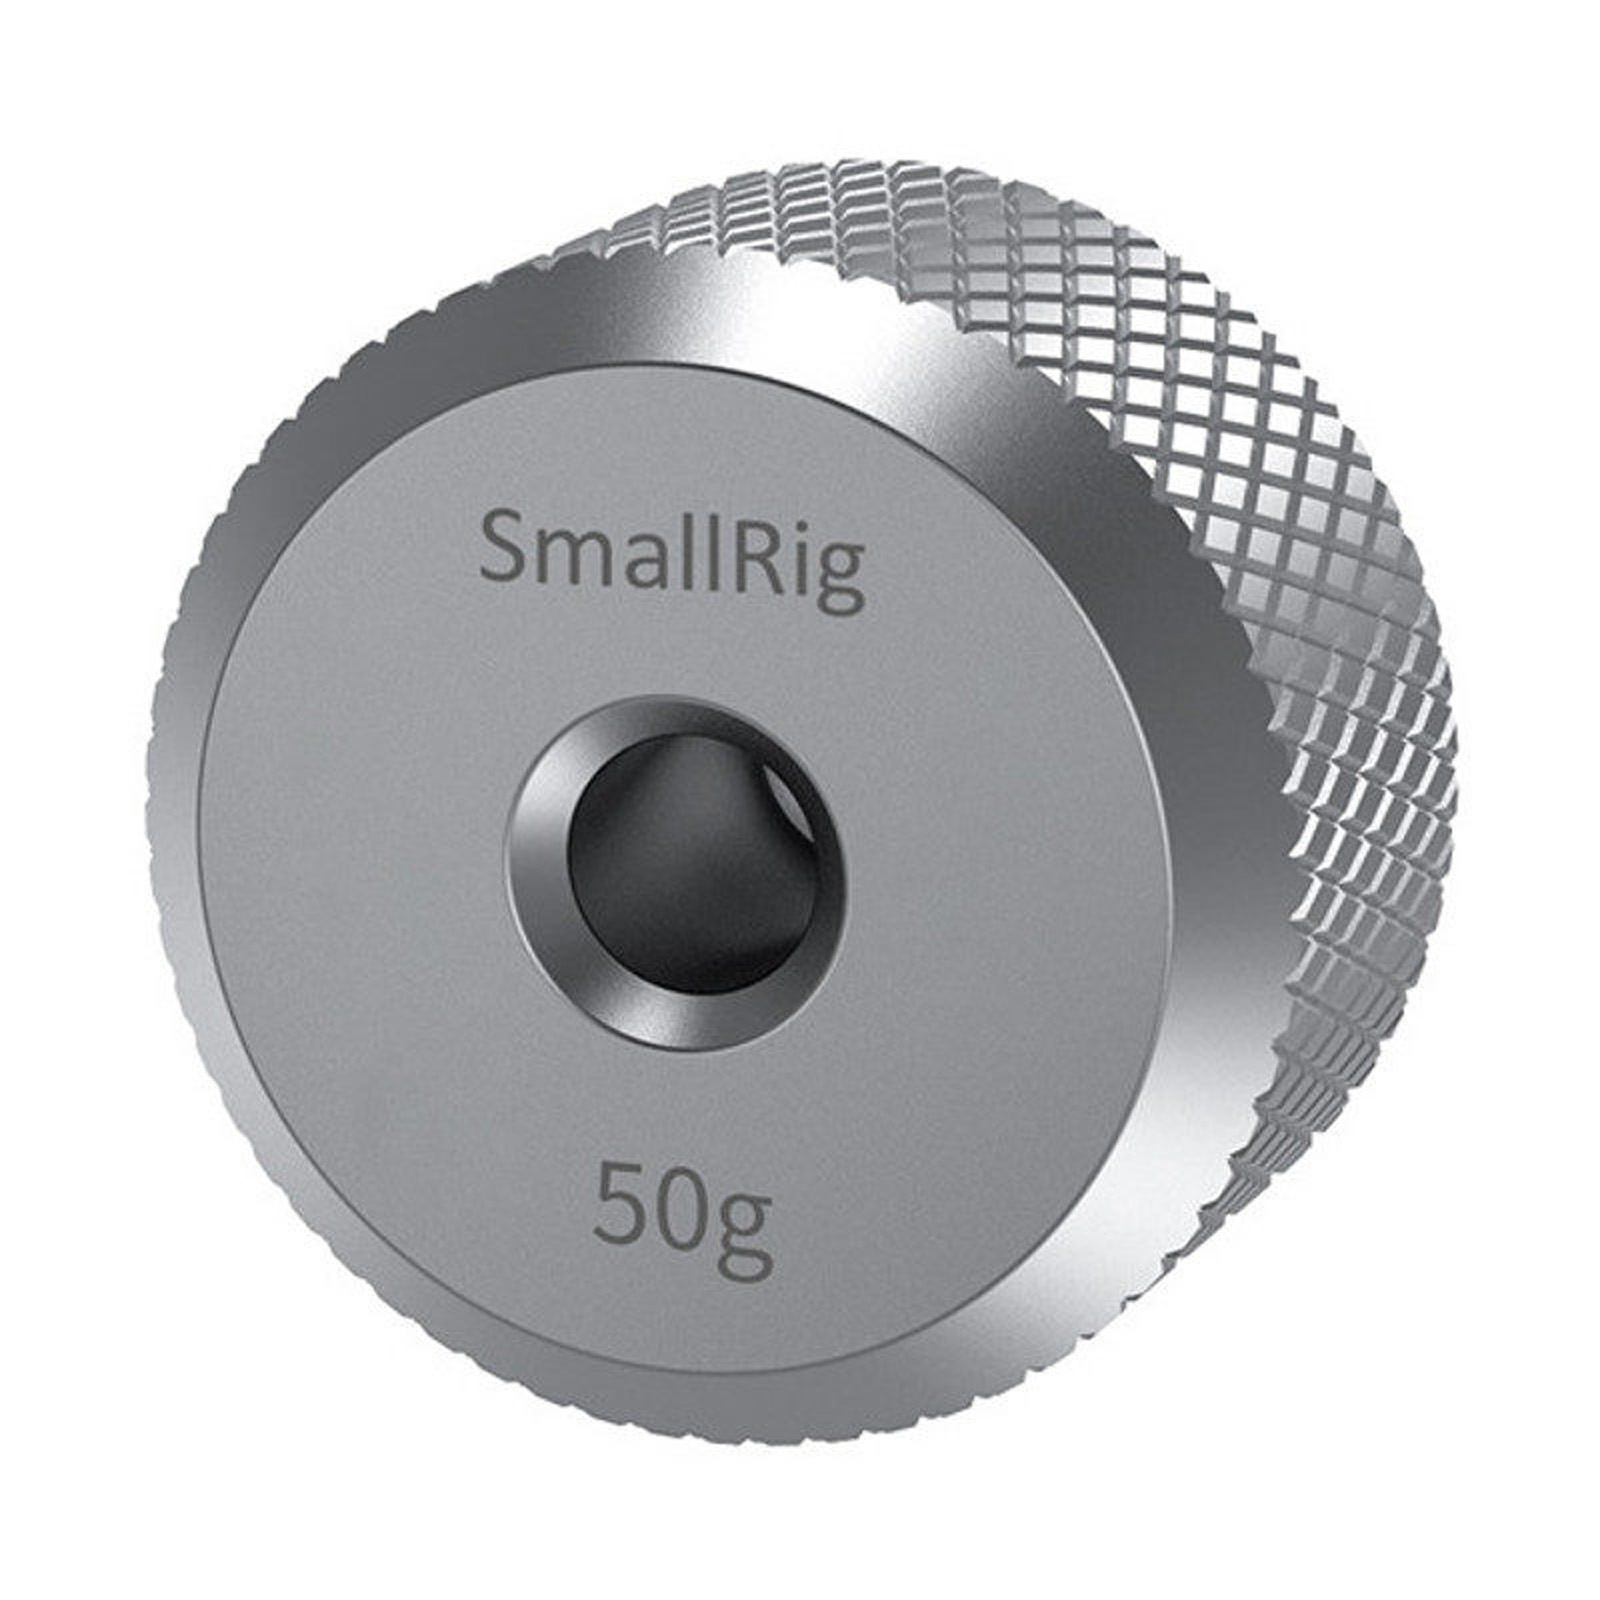 SmallRig Counterweight for DJI Ronin-S / Ronin-SC and Zhiyun Stabilizers - AAW2459